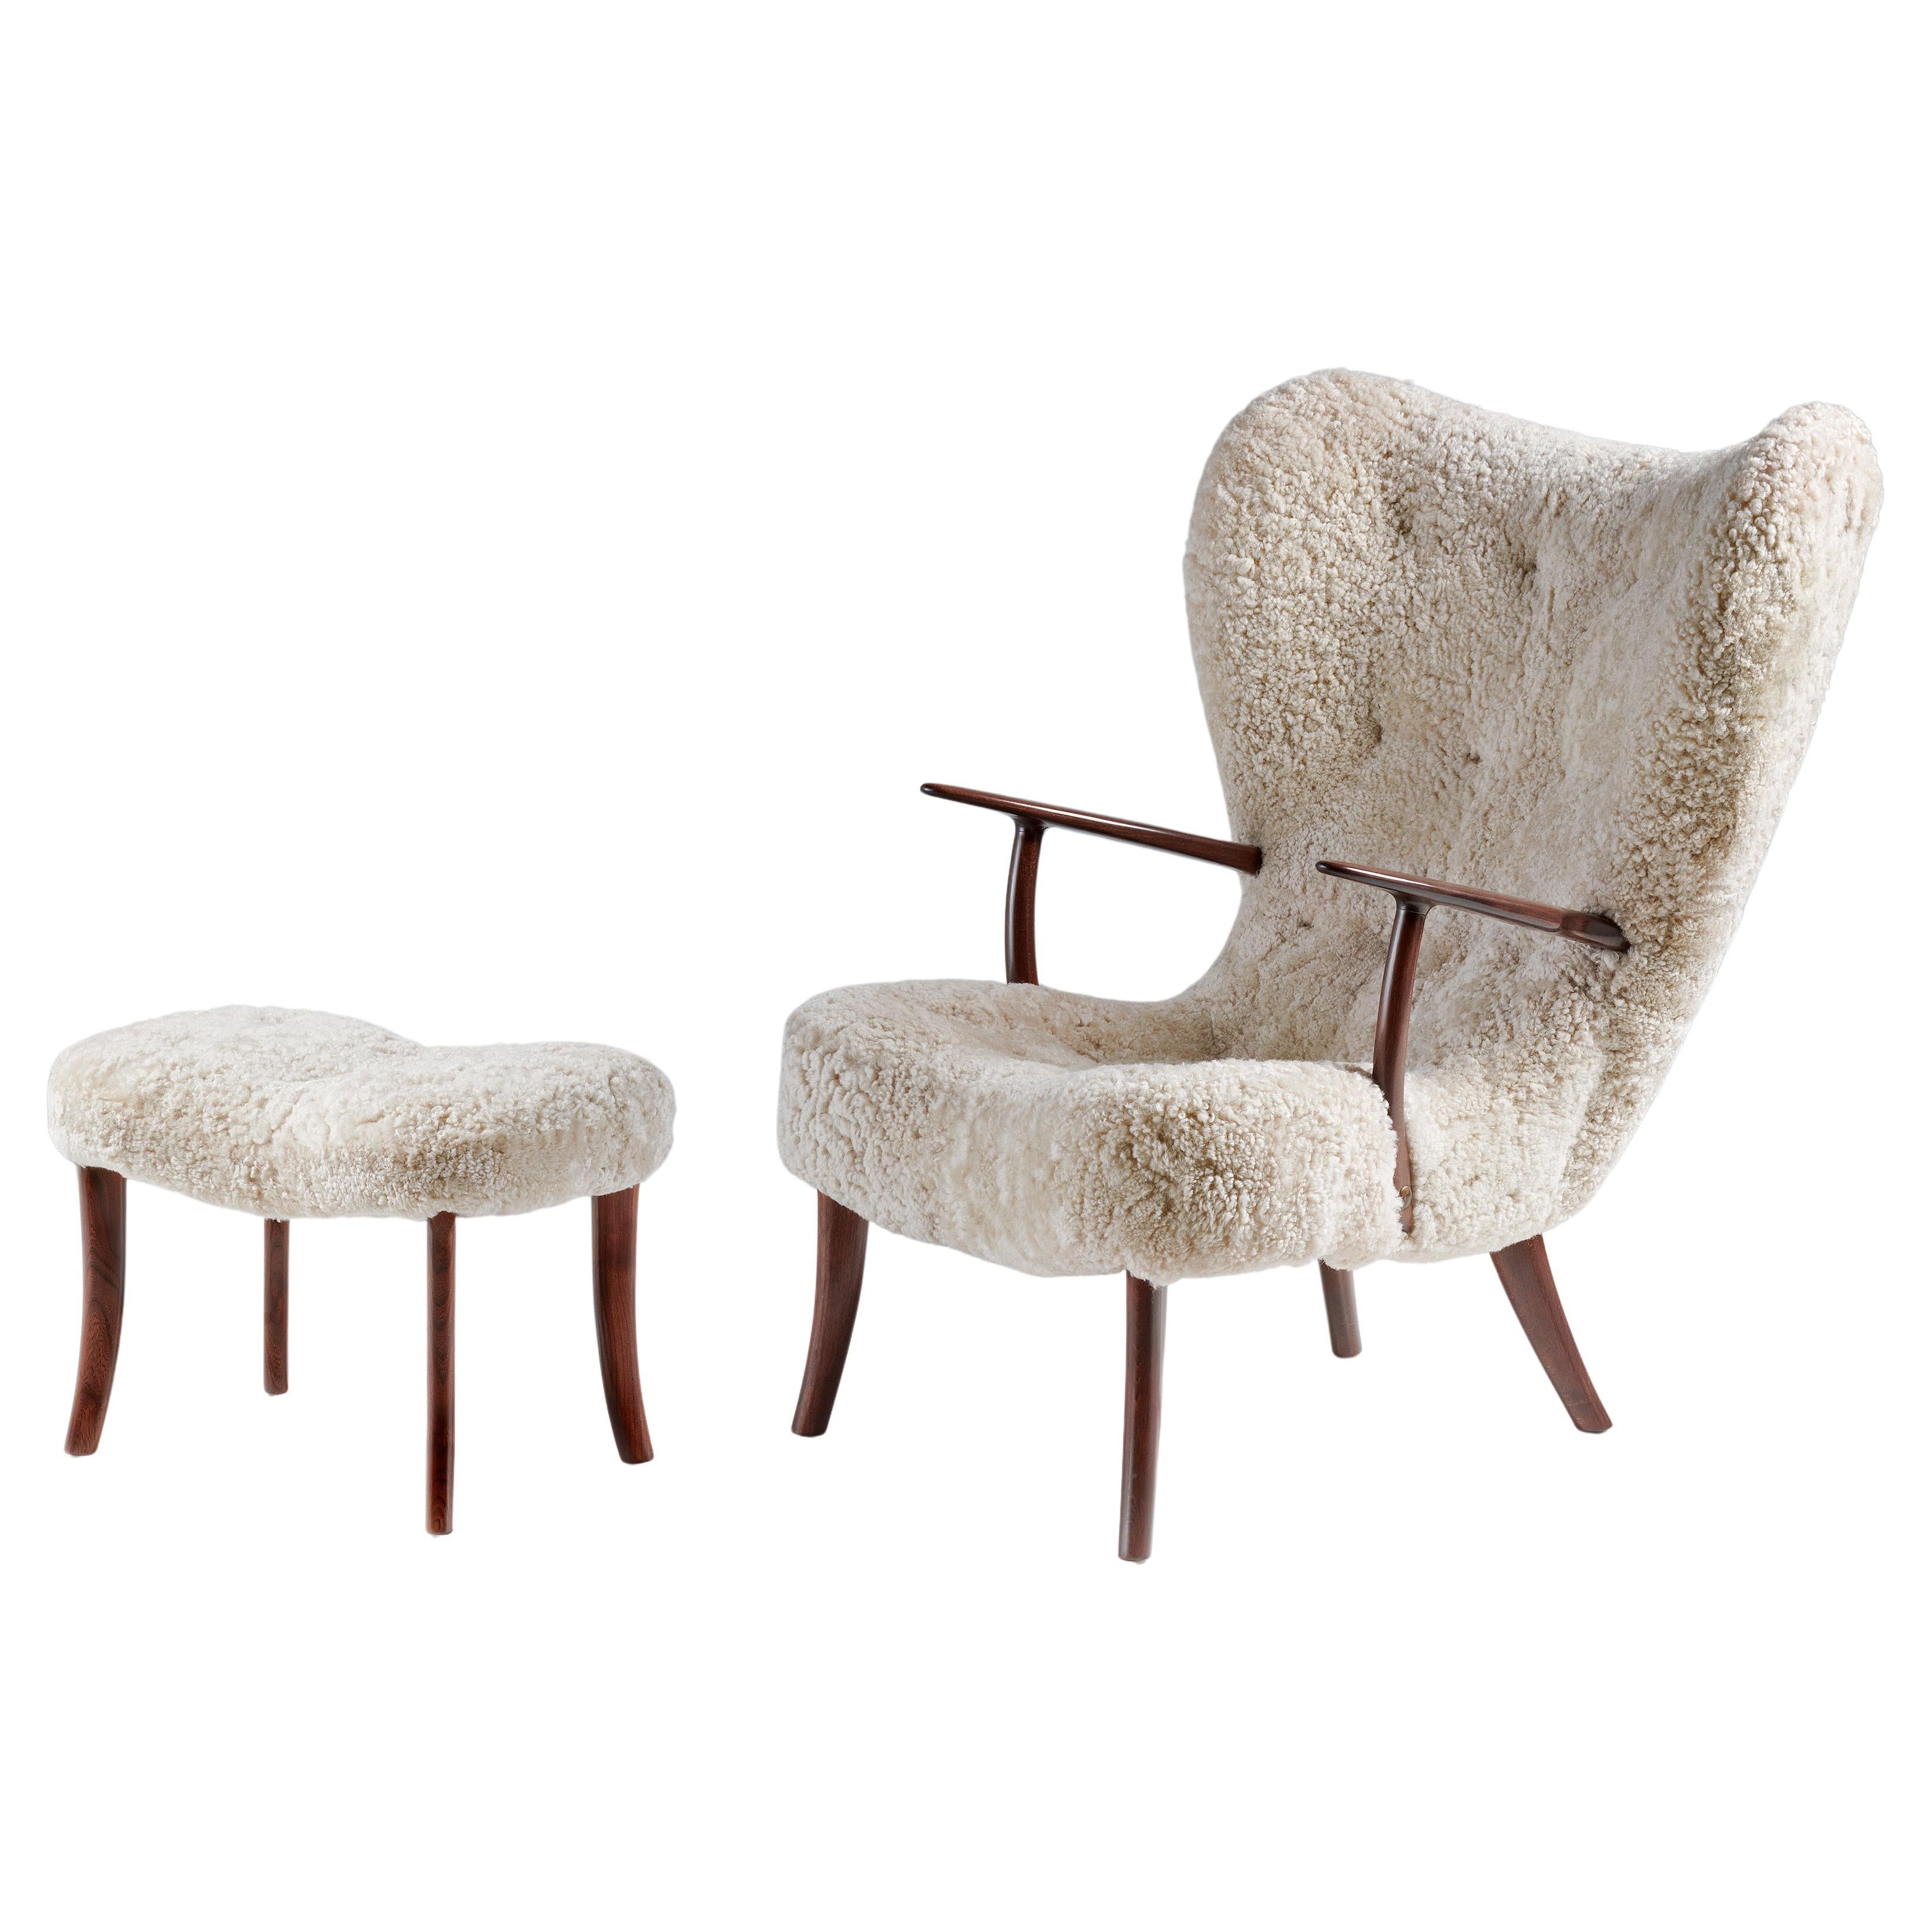 Madsen & Schubell Sheepskin Pragh Chair & Stool c1950s For Sale